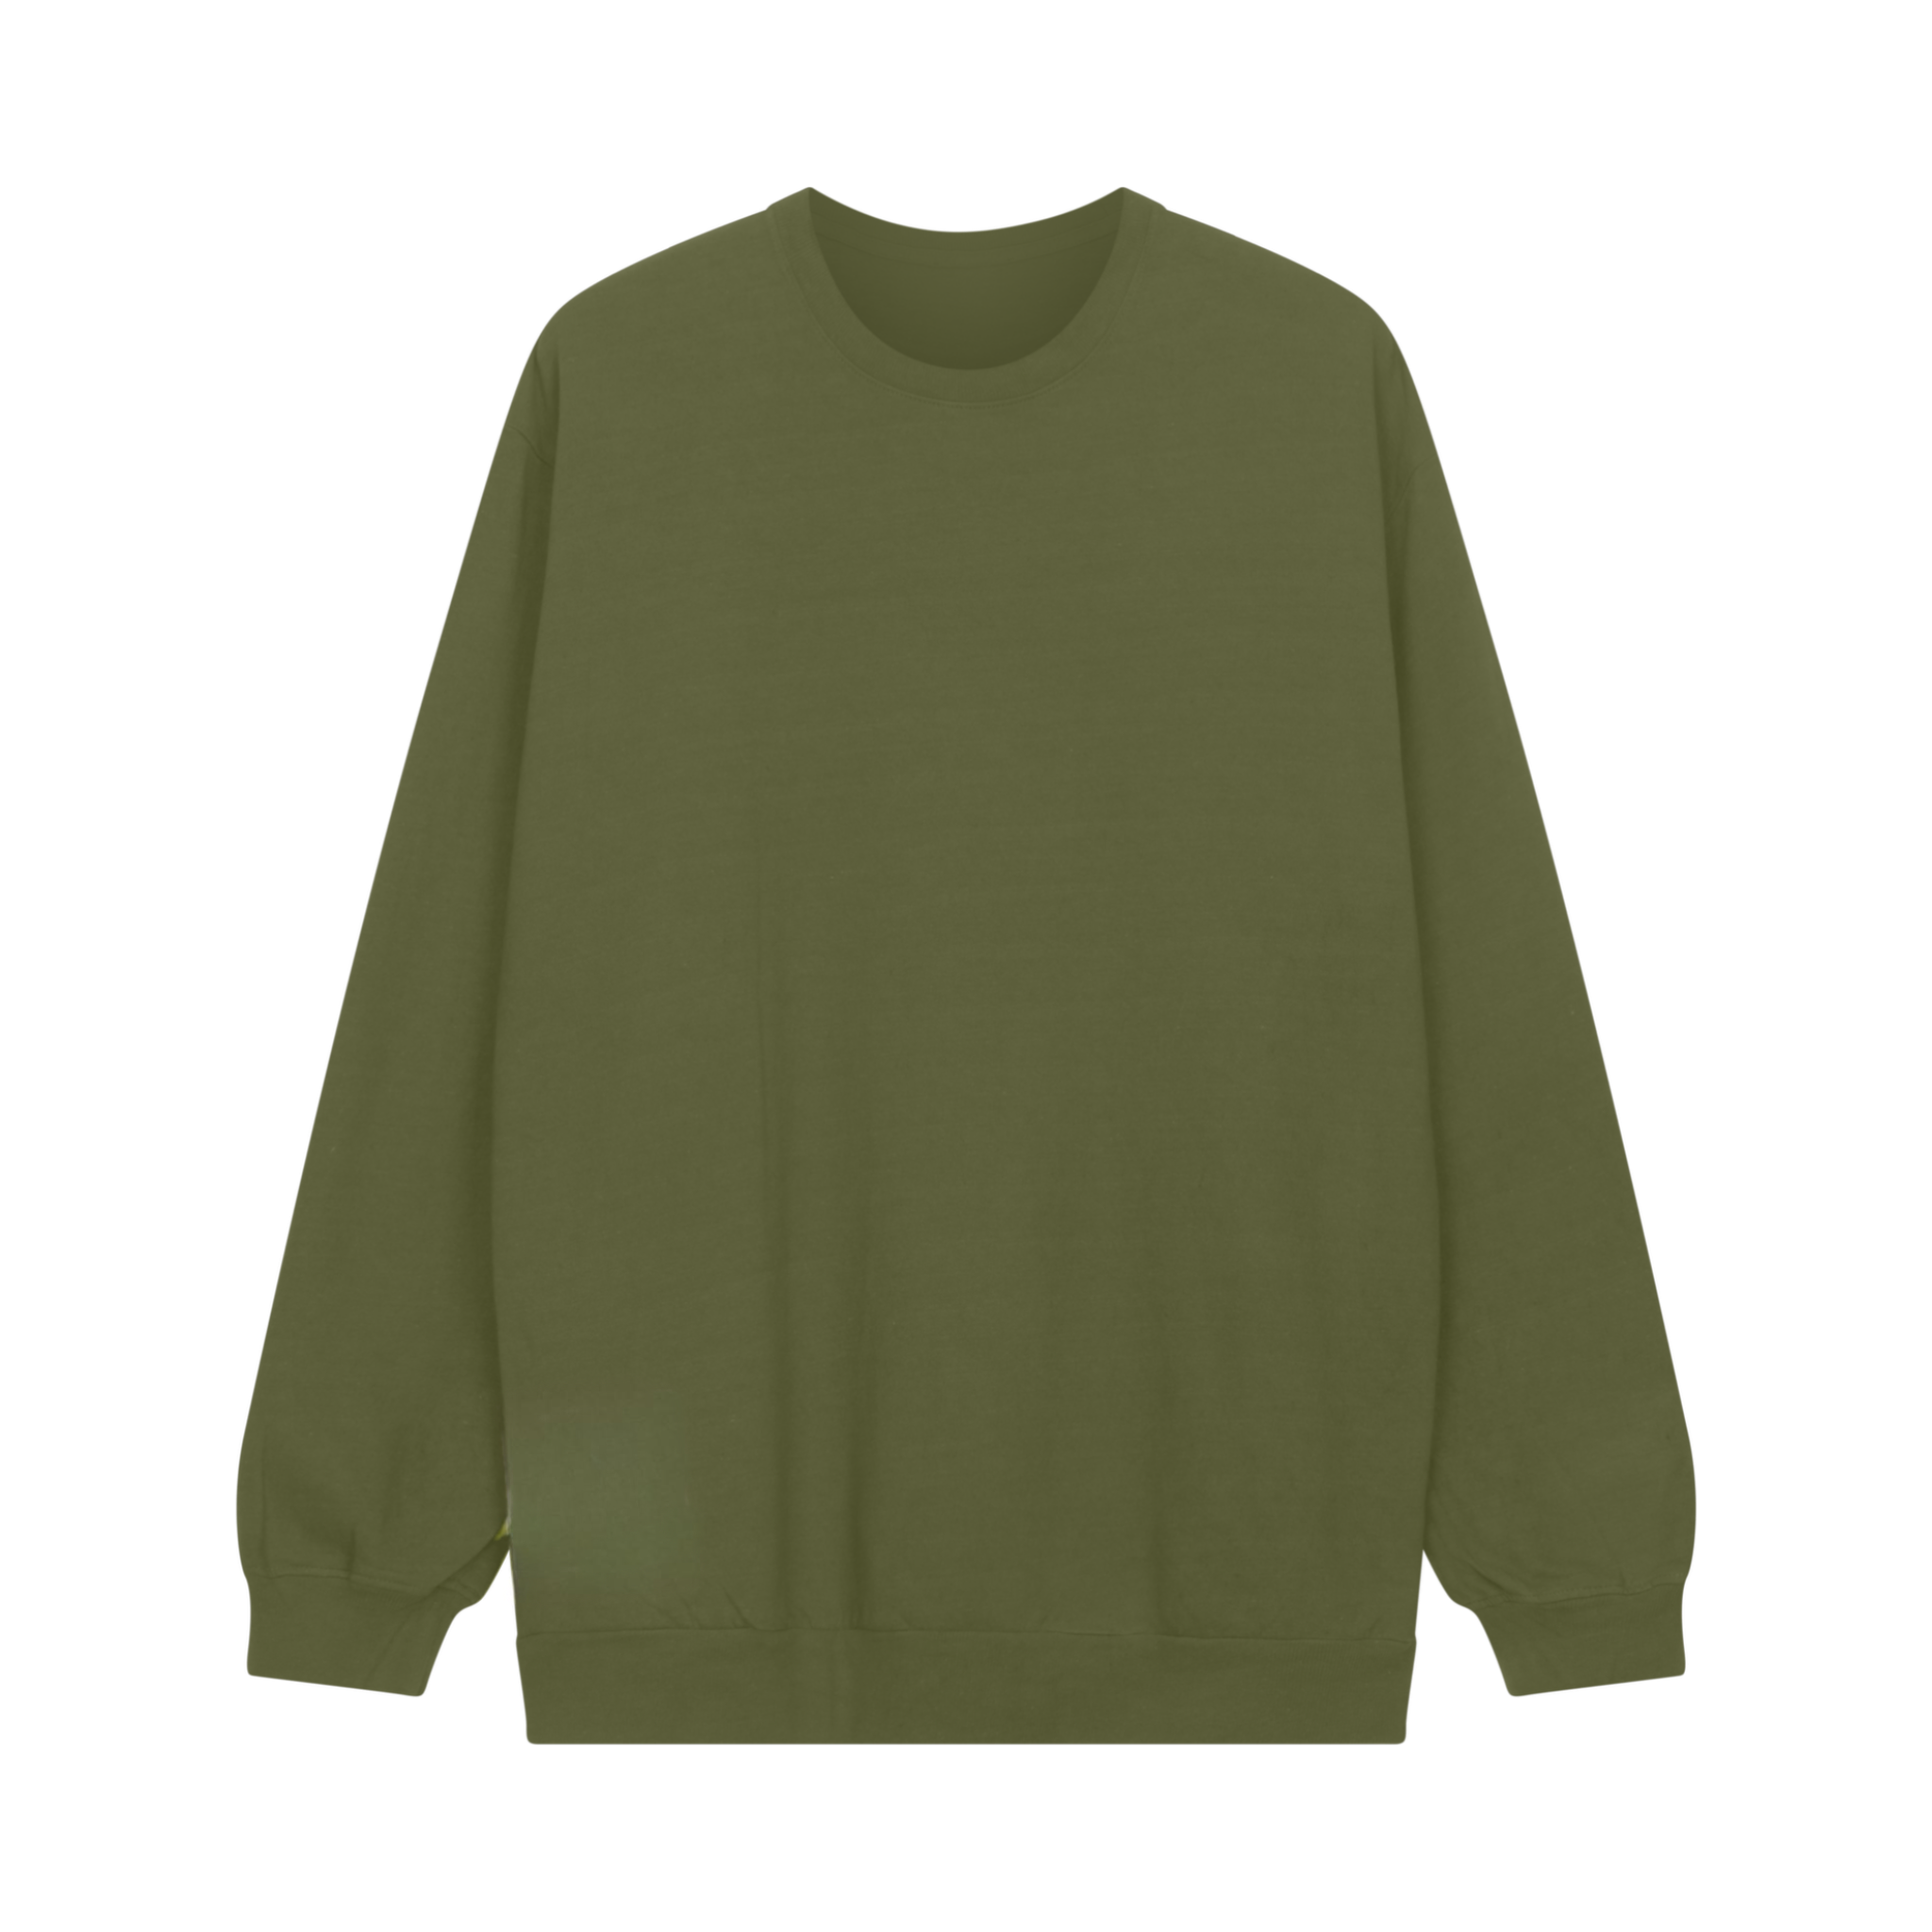 100% Recycled Cotton Lightweight Sweatshirt